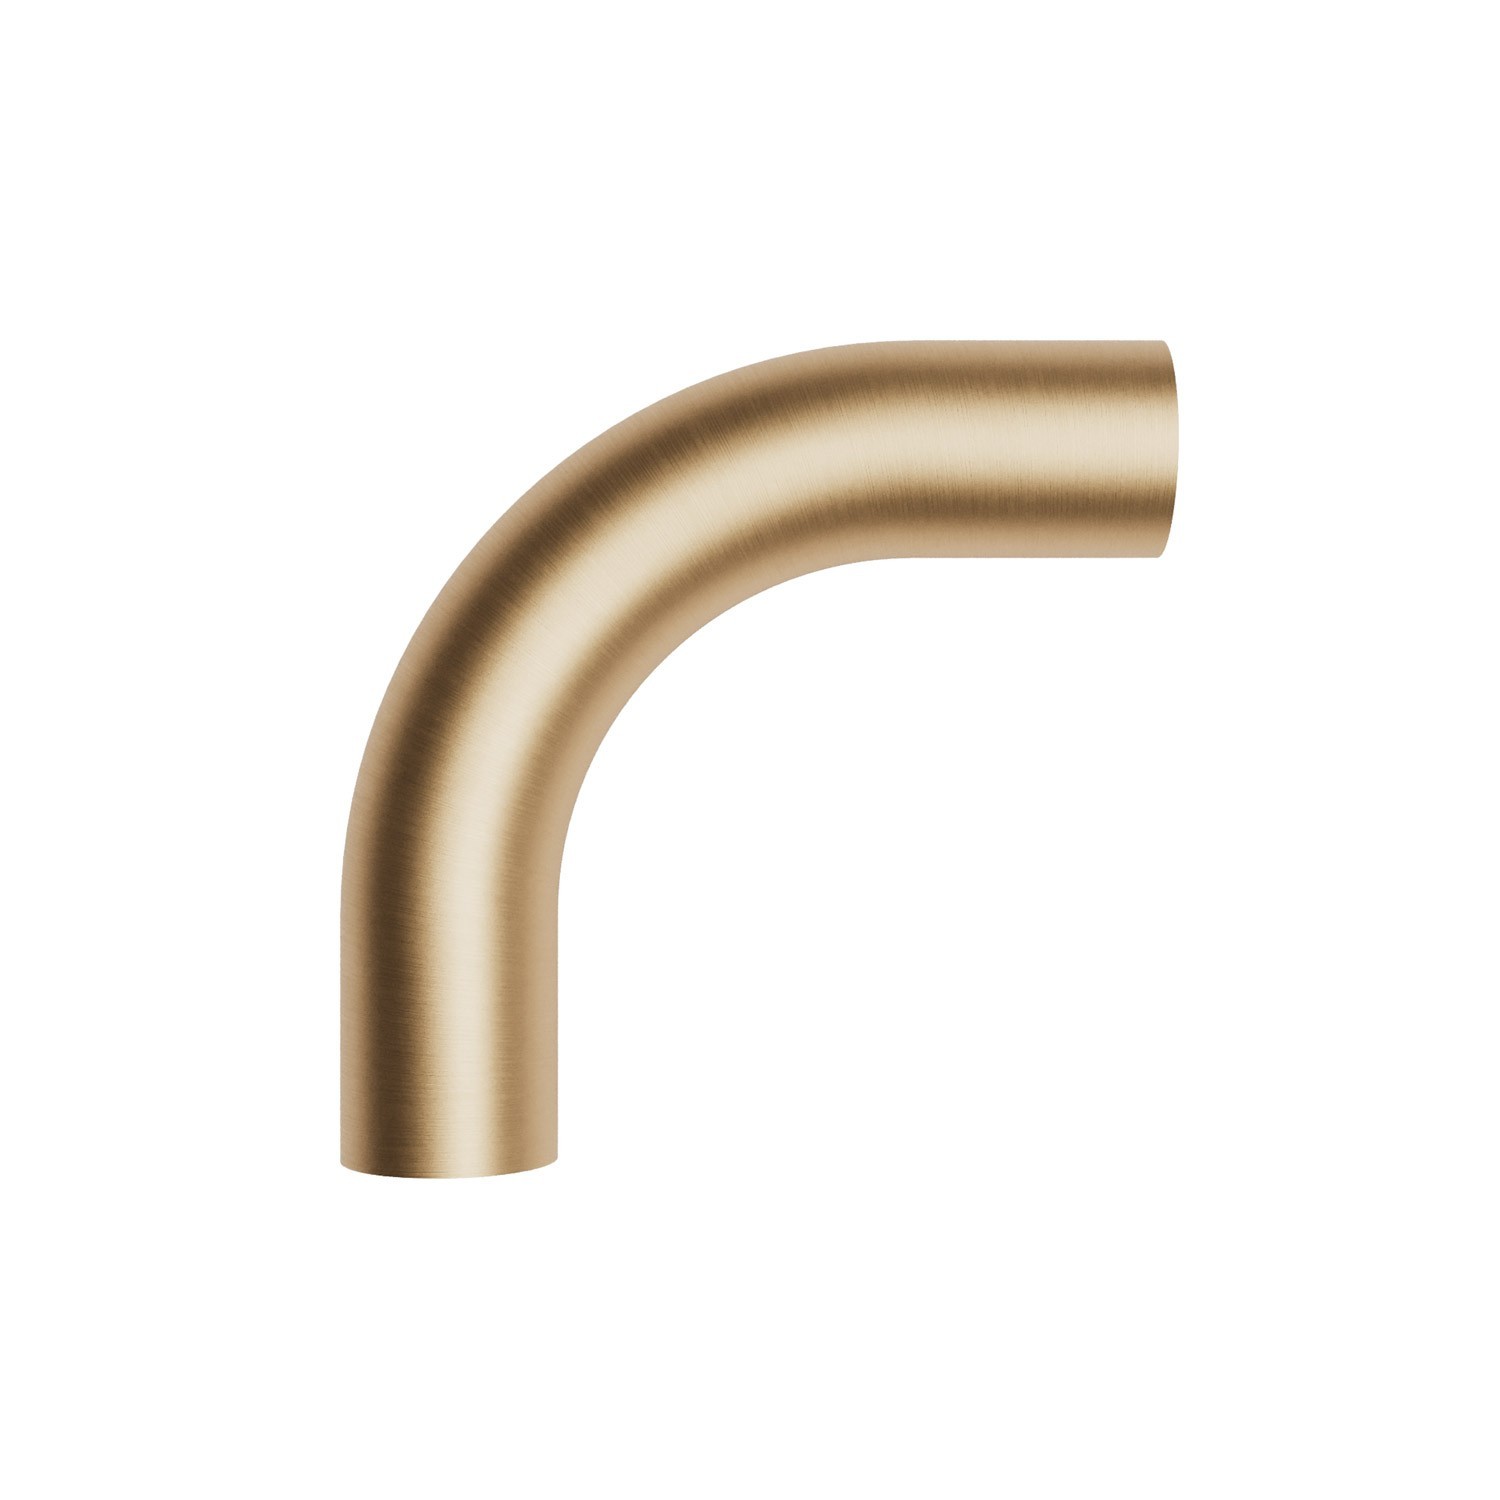 5-cm bent metal extension tube